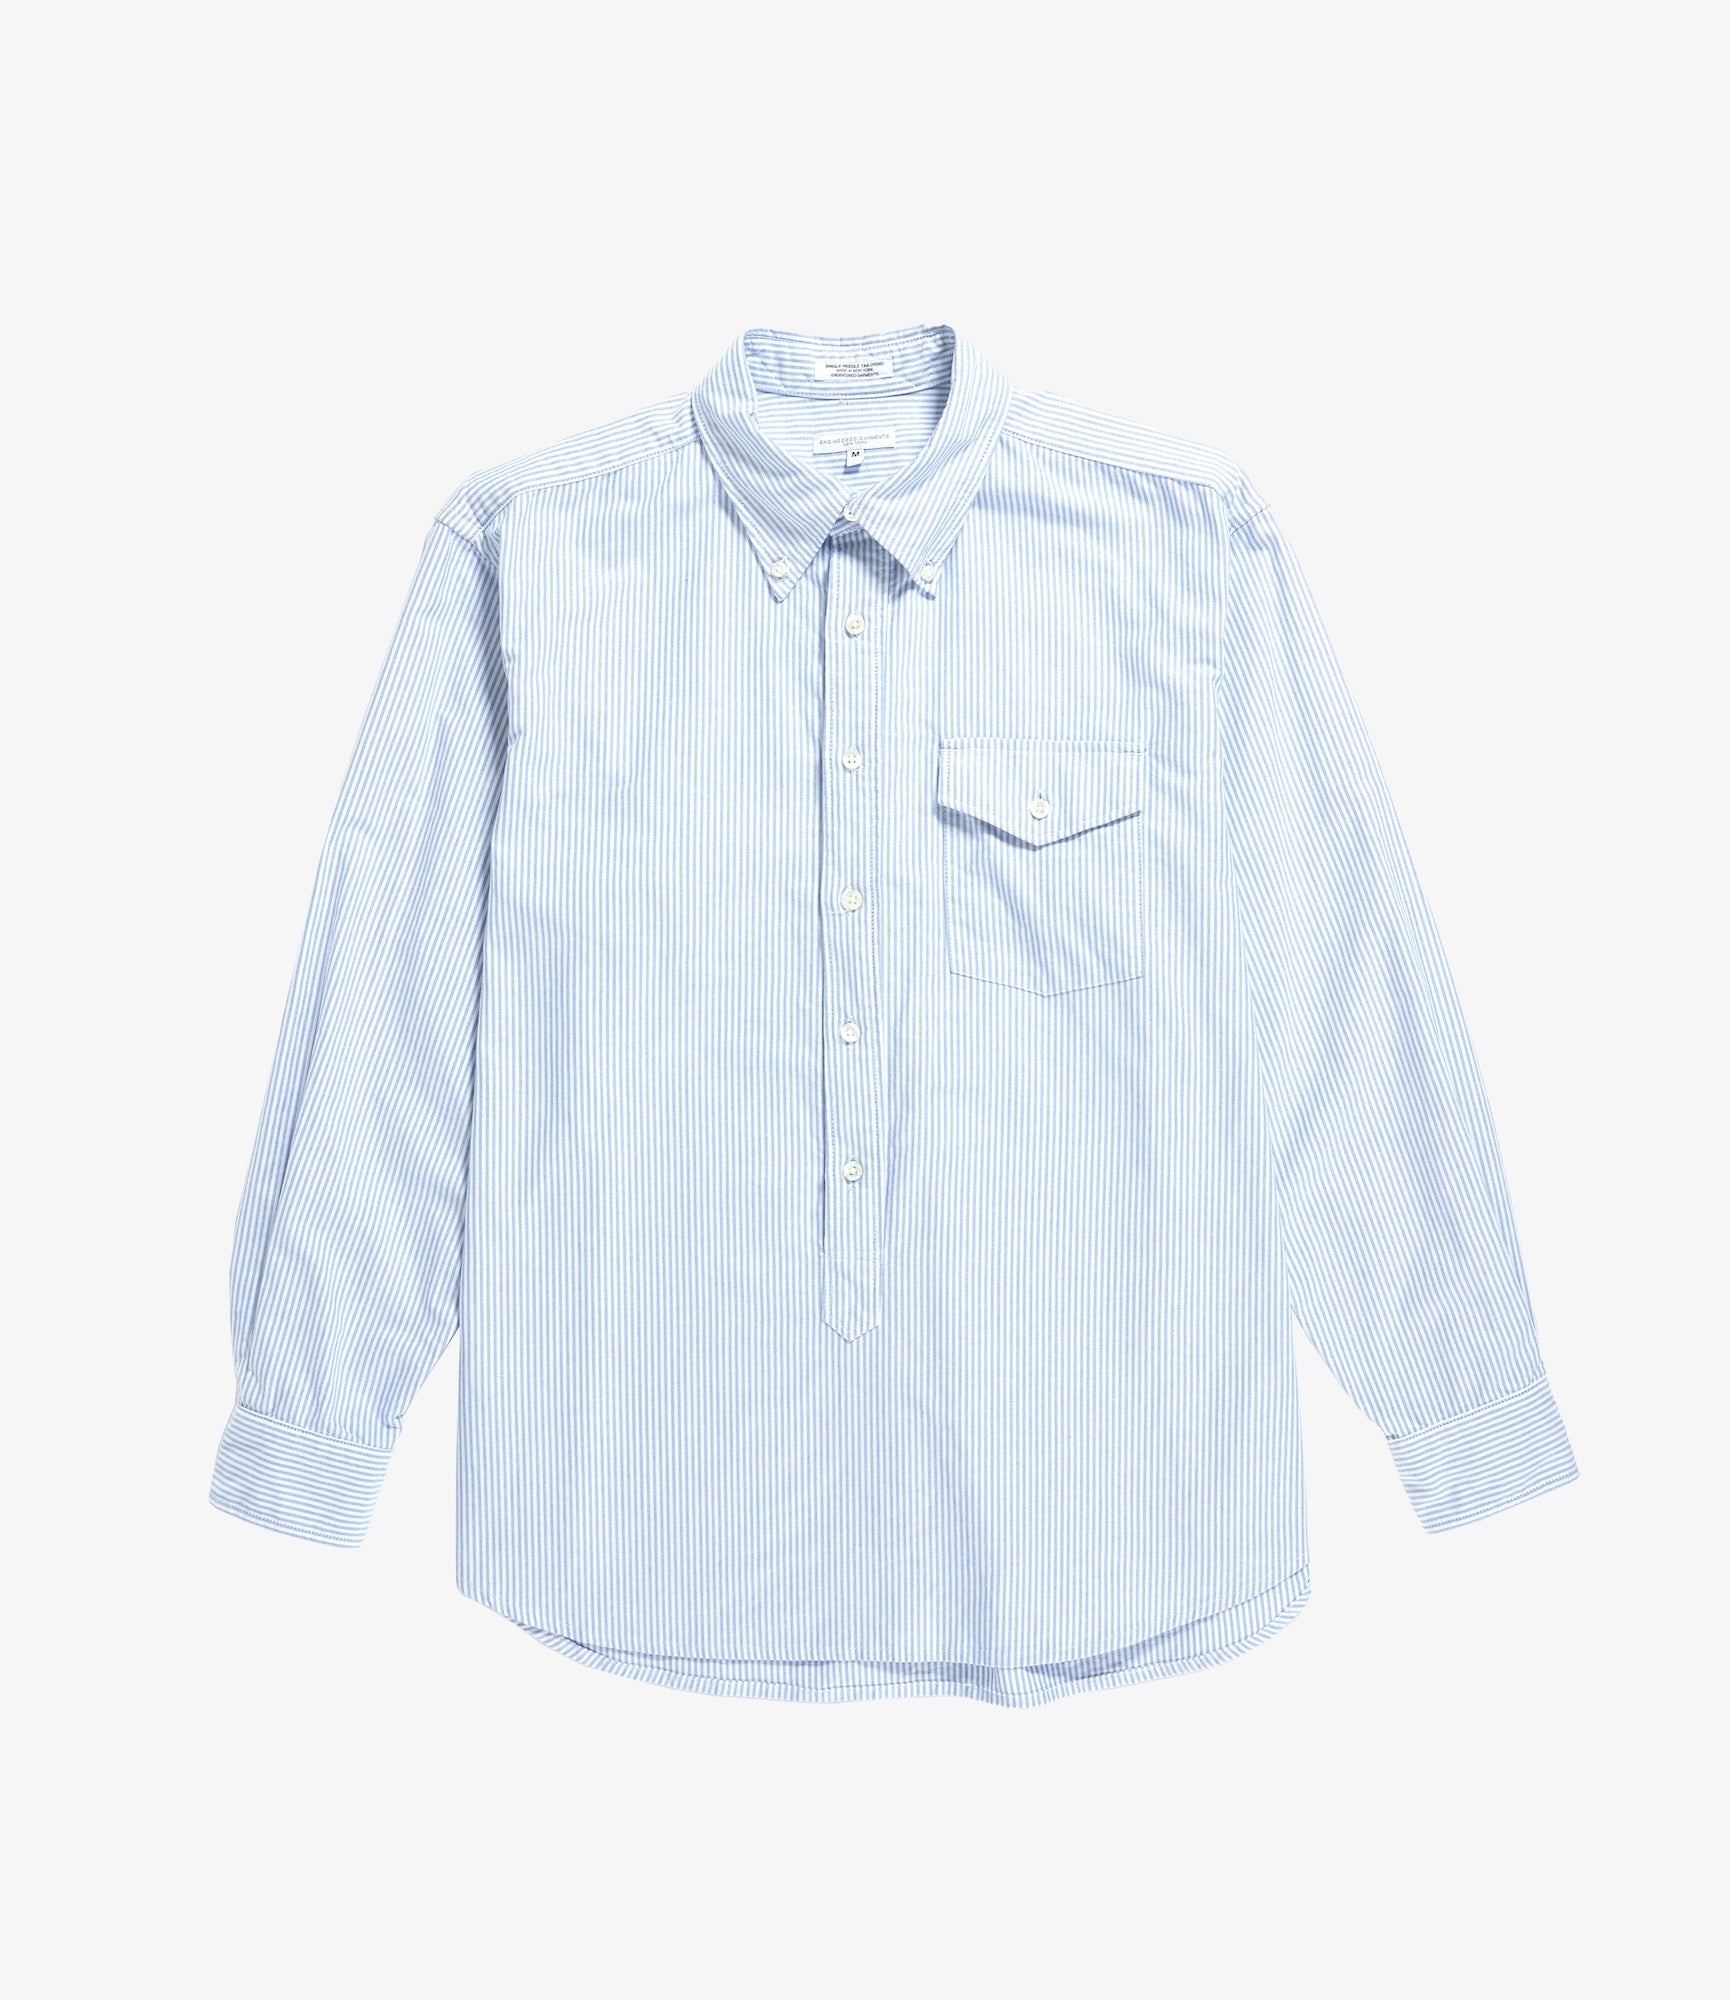 Engineered Garments IVY BD Shirt - Navy Candy Stripe Oxford